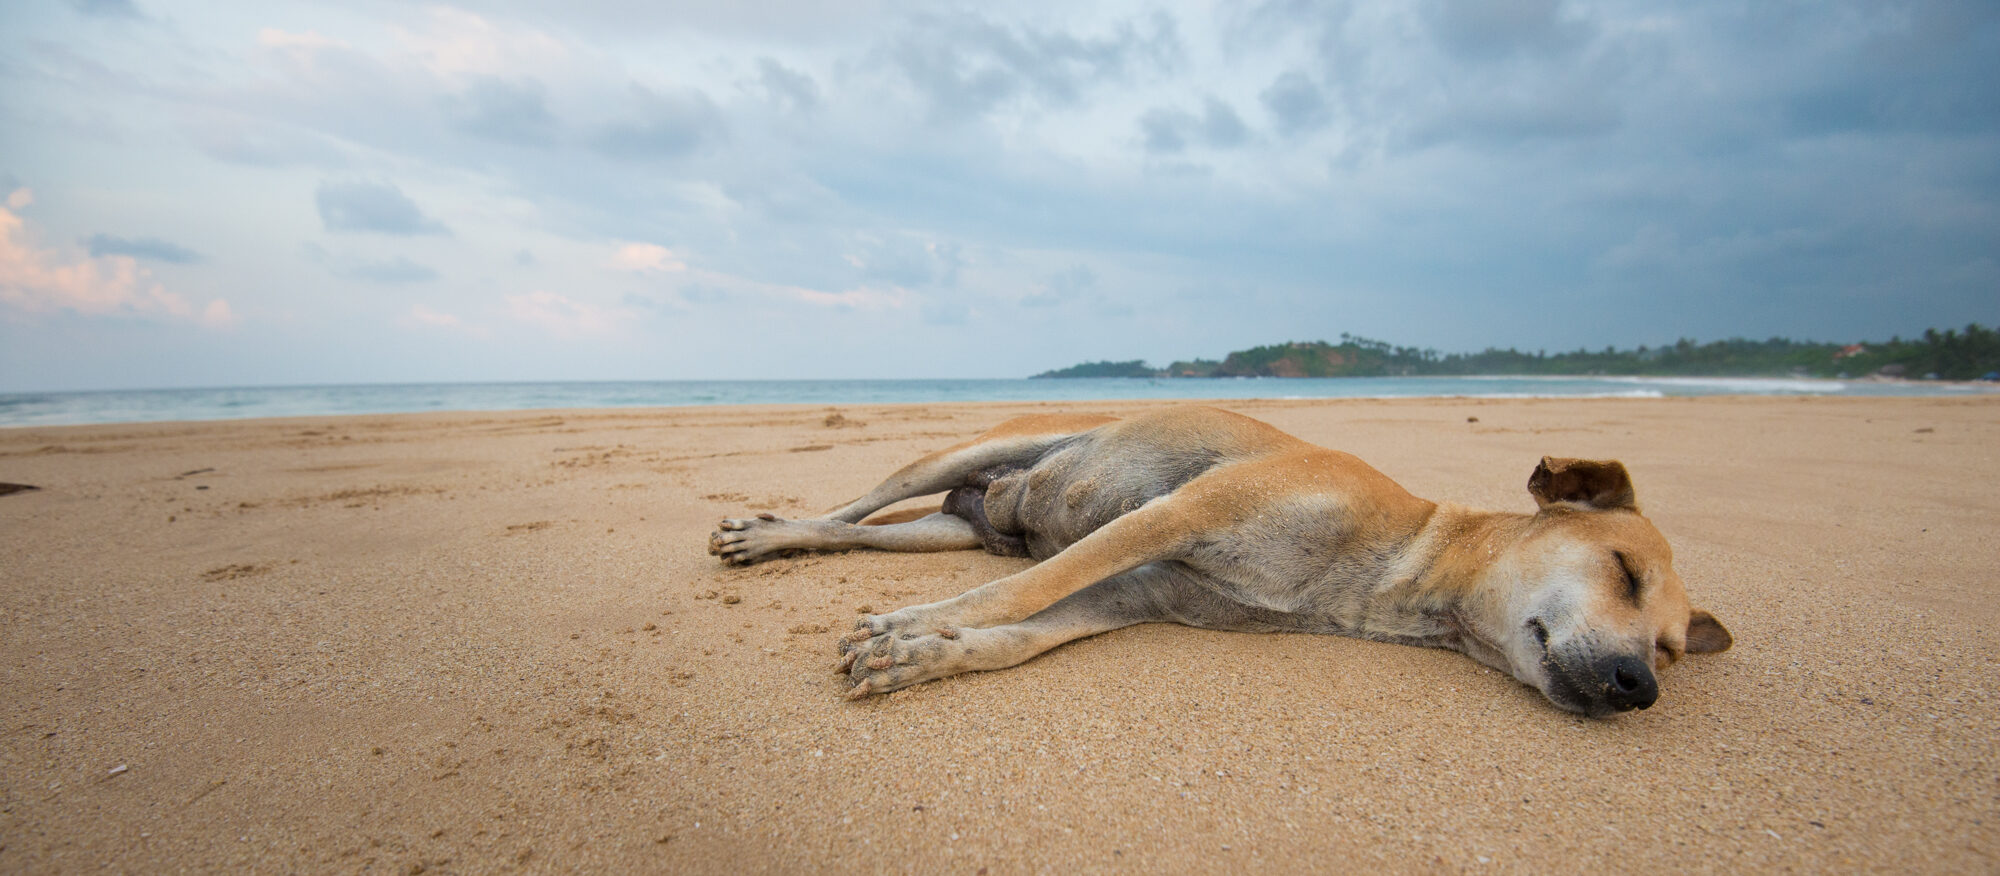 Street dog sleeping on a beach in Sri Lanka